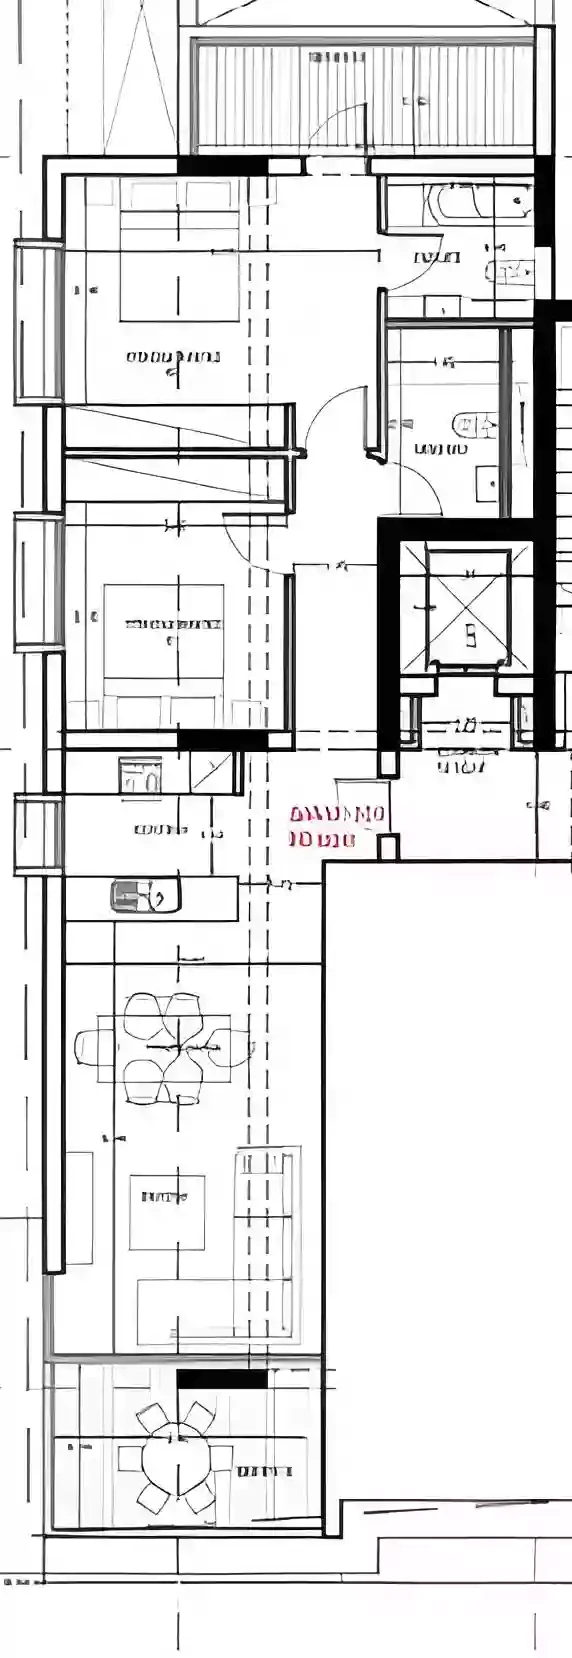 2 bedrooms, 81 sq.m., image 1